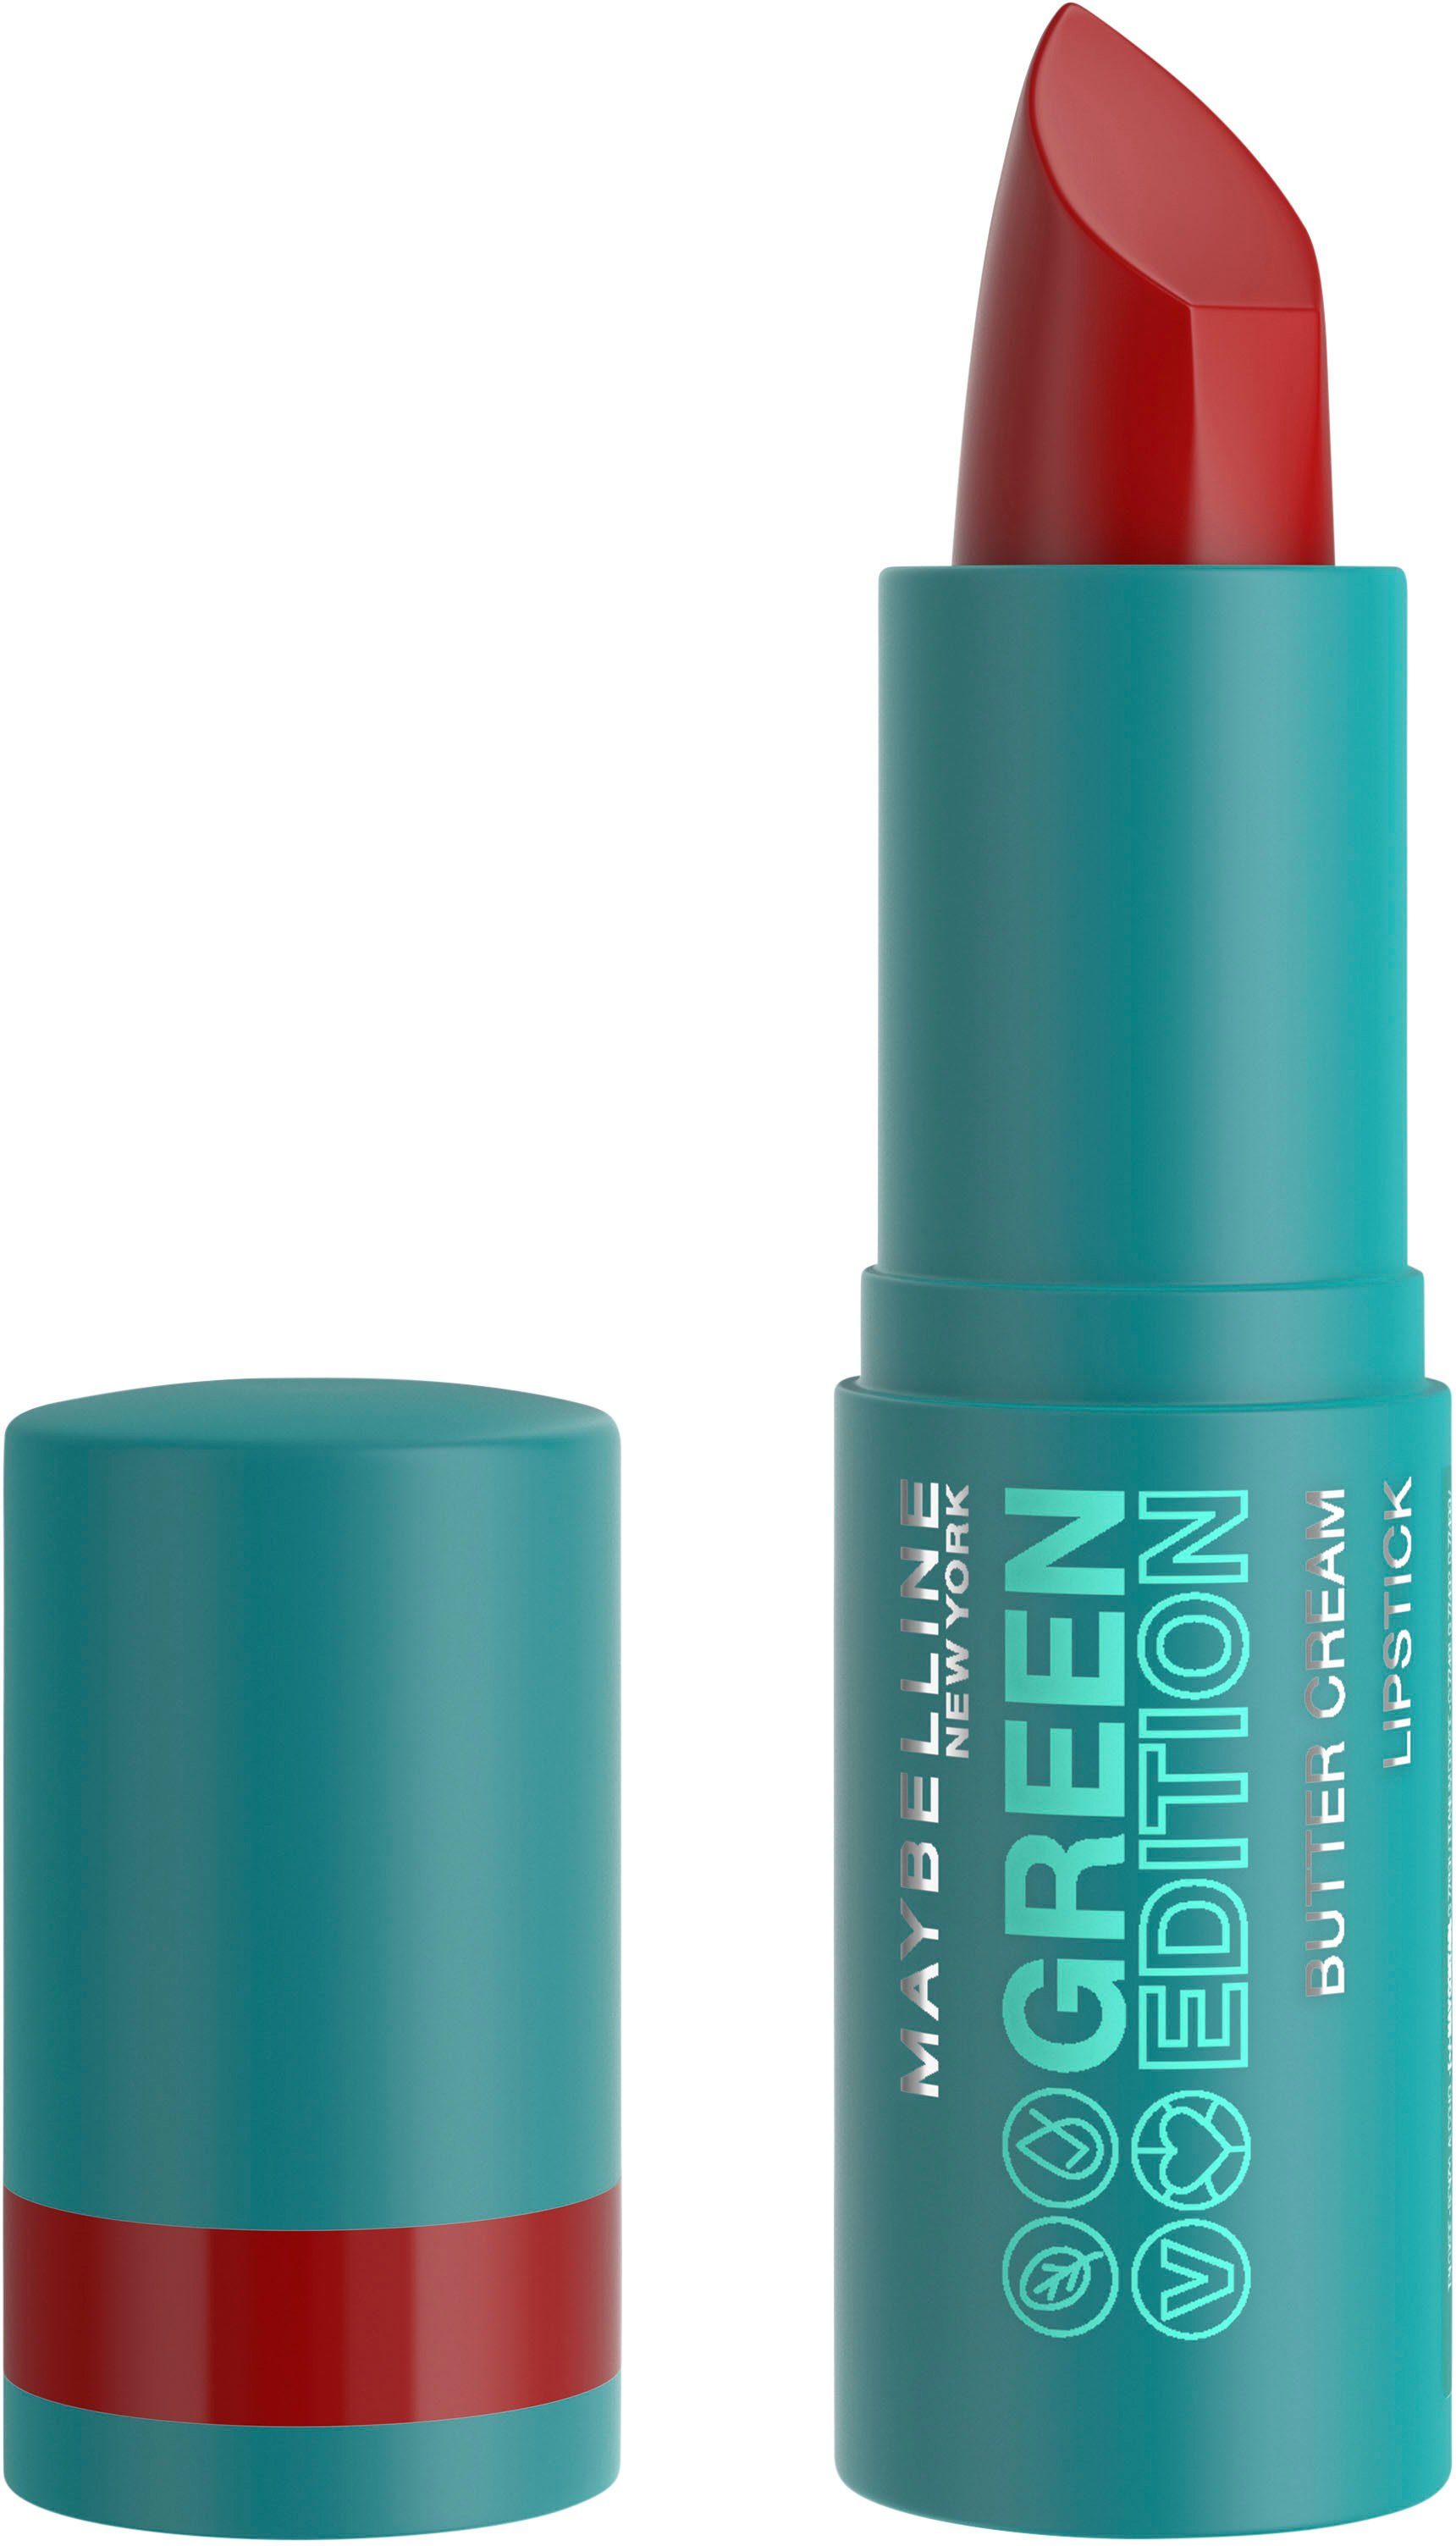 Edition: Lipstick, Buttercream Lippenstift MAYBELLINE Maybelline Formel, Recycling-Mix Green vegane New YORK York NEW